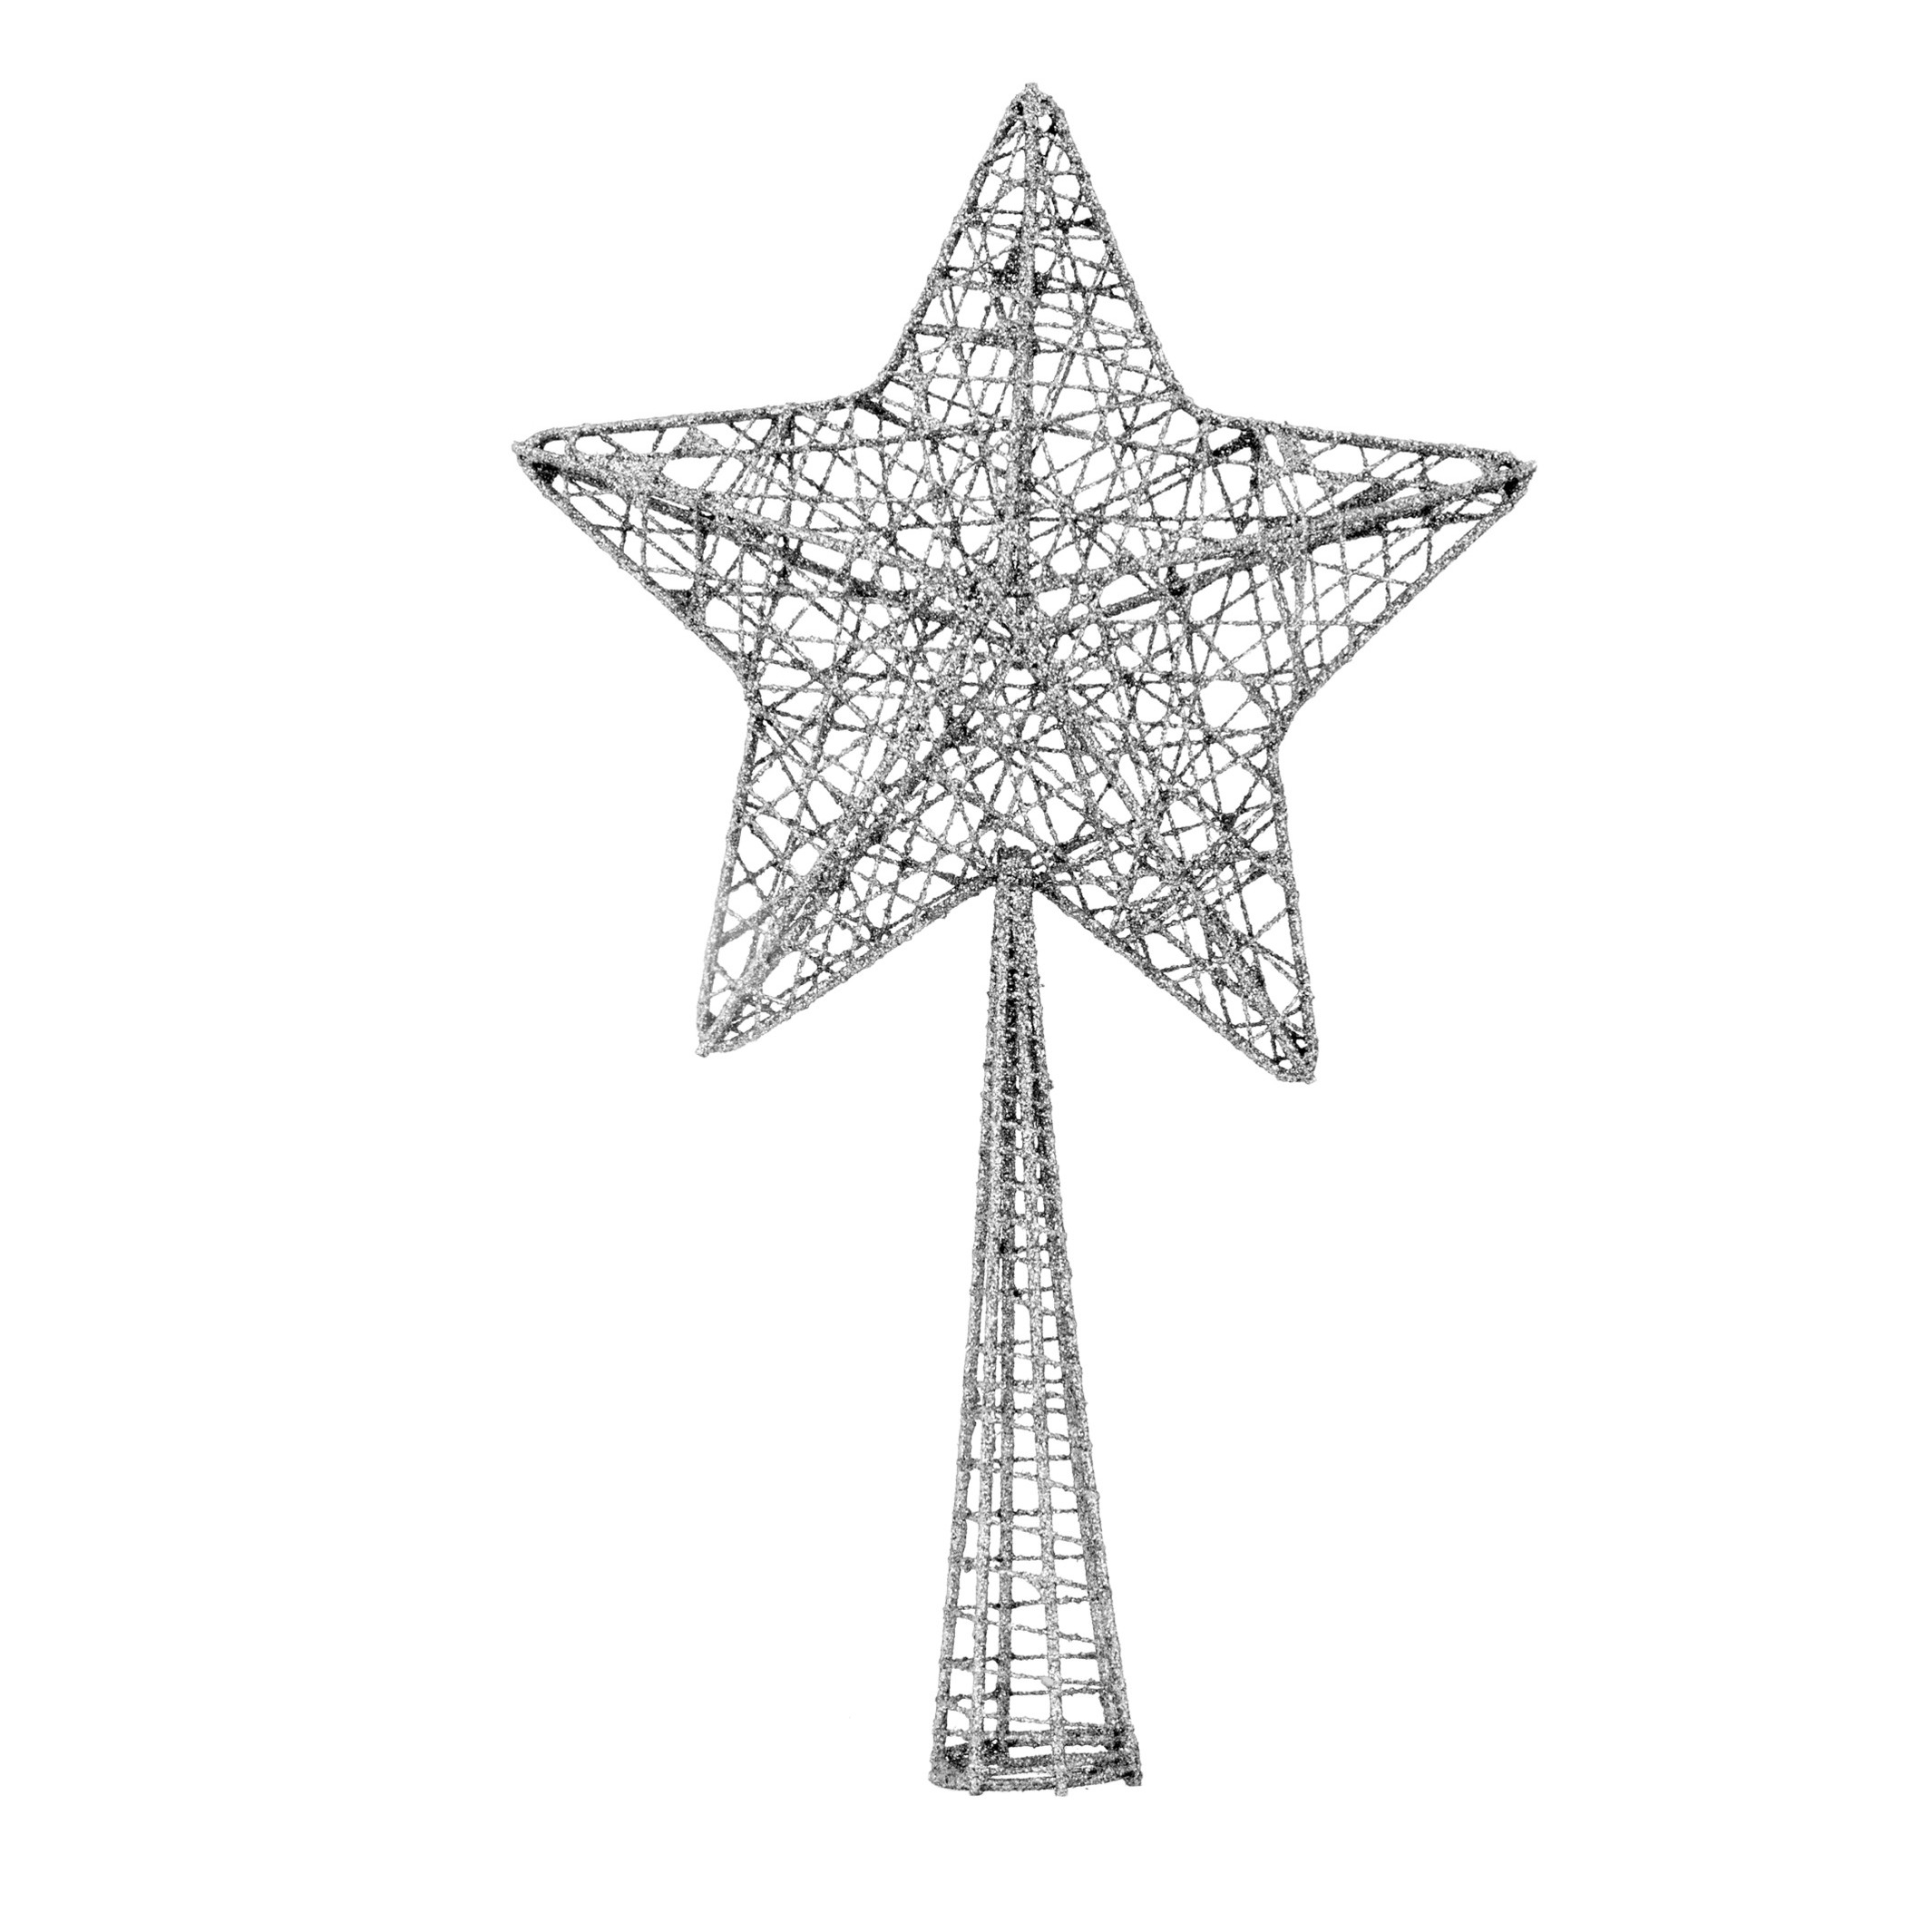 Kunststof ster piek-kerstboom topper glitter zilver 28 cm